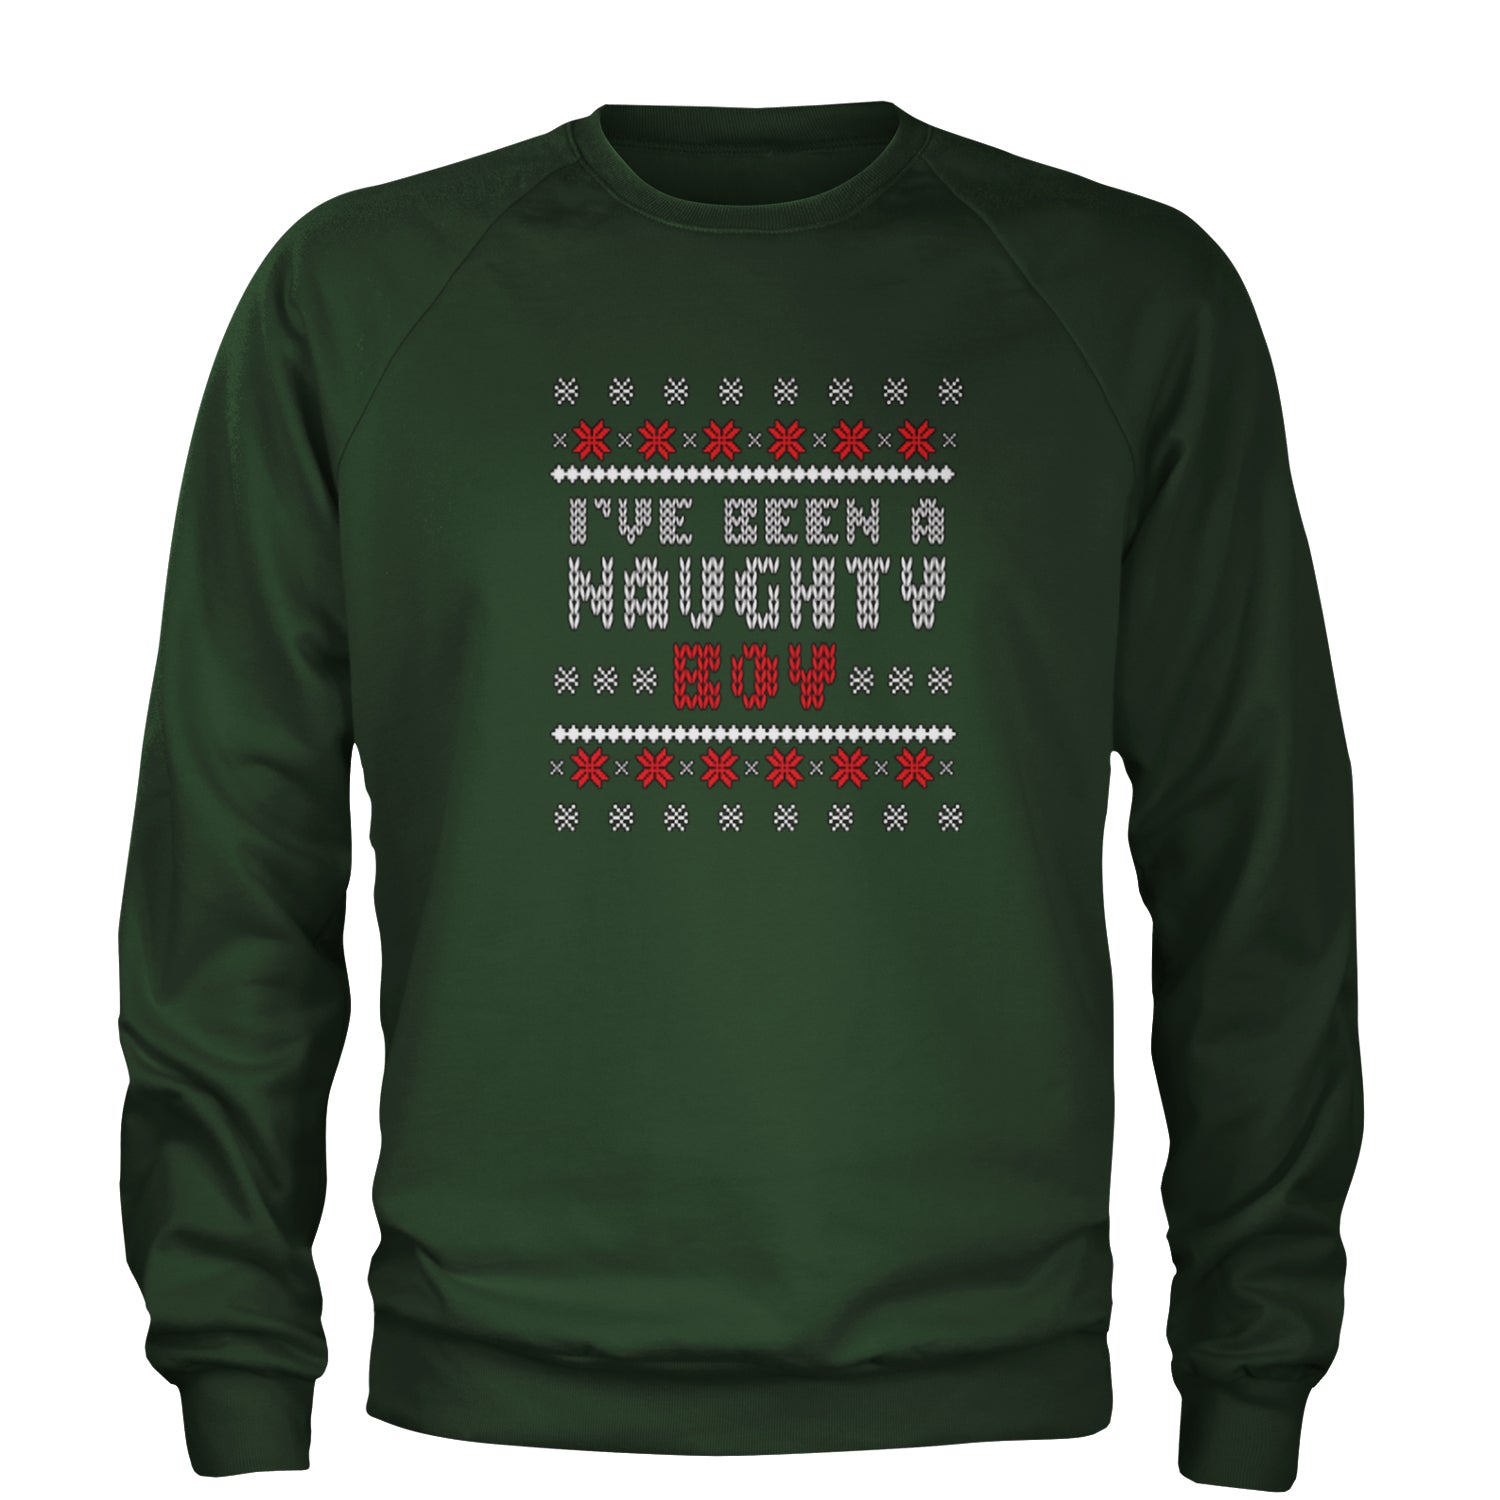 I've Been A Naughty Boy Ugly Christmas Adult Crewneck Sweatshirt list, naughty, nice, santa, ugly, xmas by Expression Tees